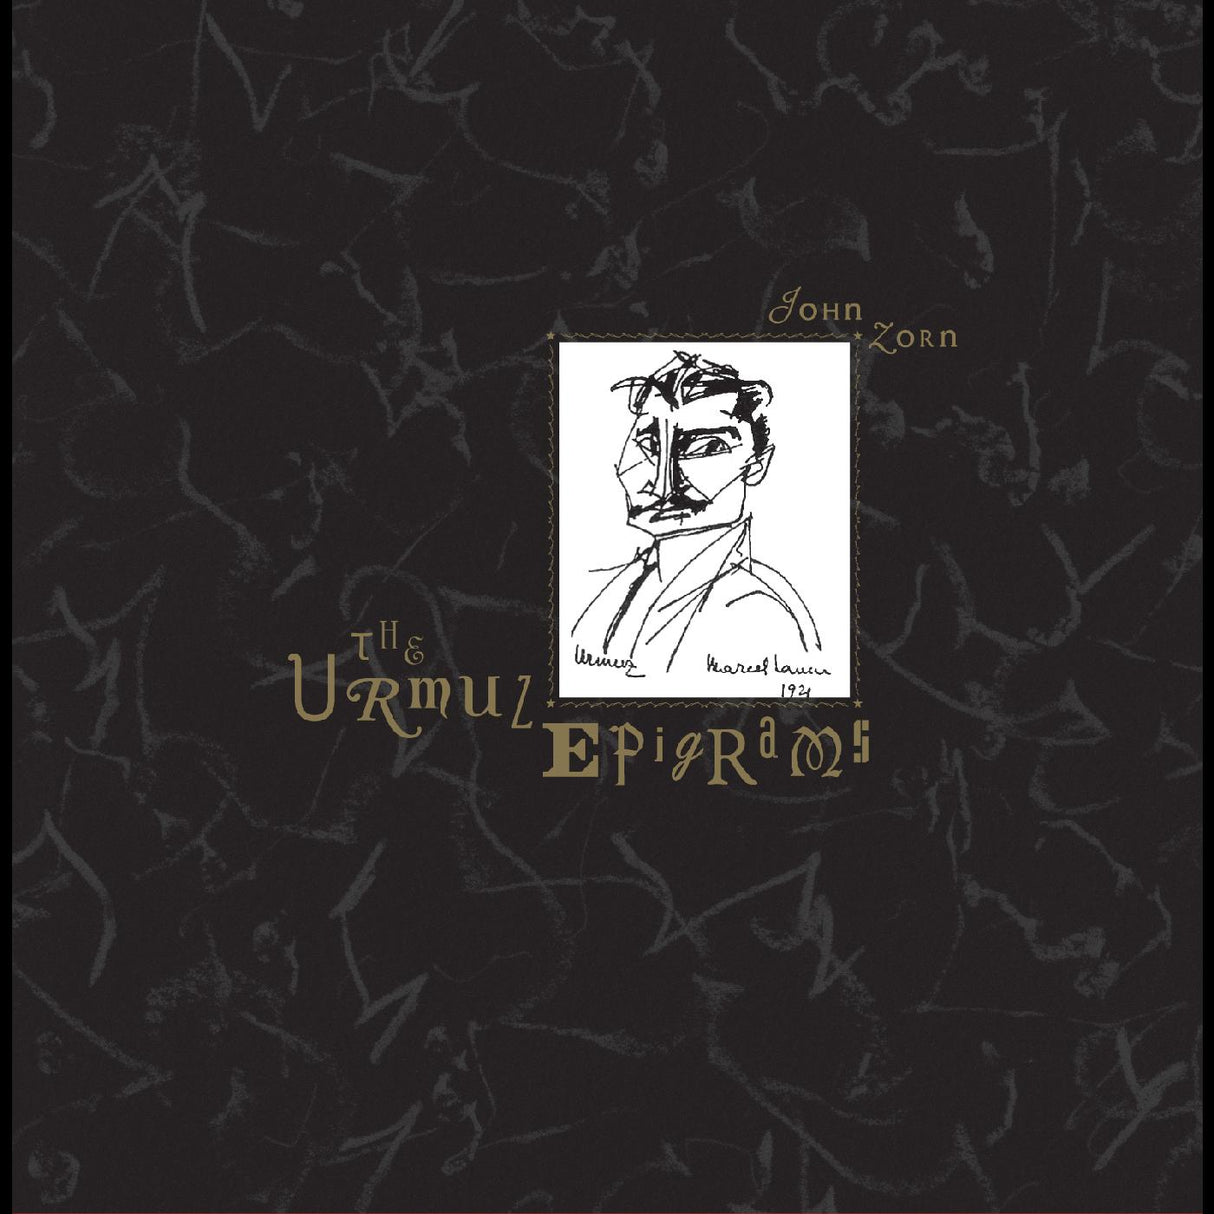 John Zorn - The Urmuz Epigrams [CD]